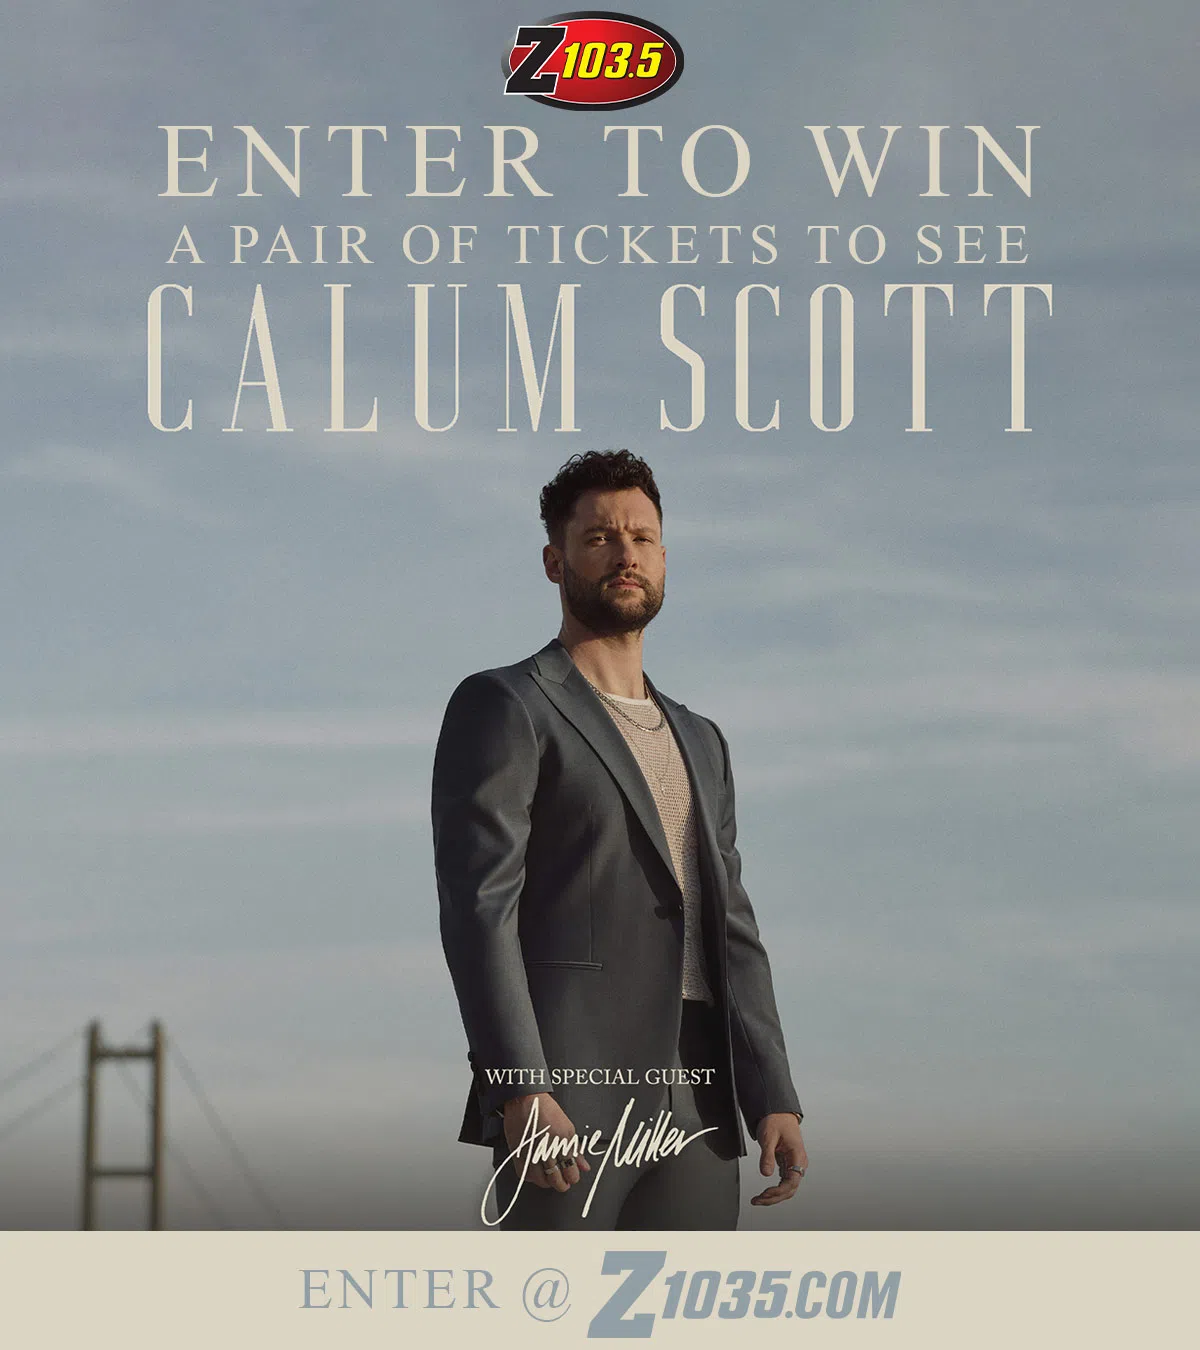 Feature: https://z1035.com/win/win-tickets-to-see-calum-scott/